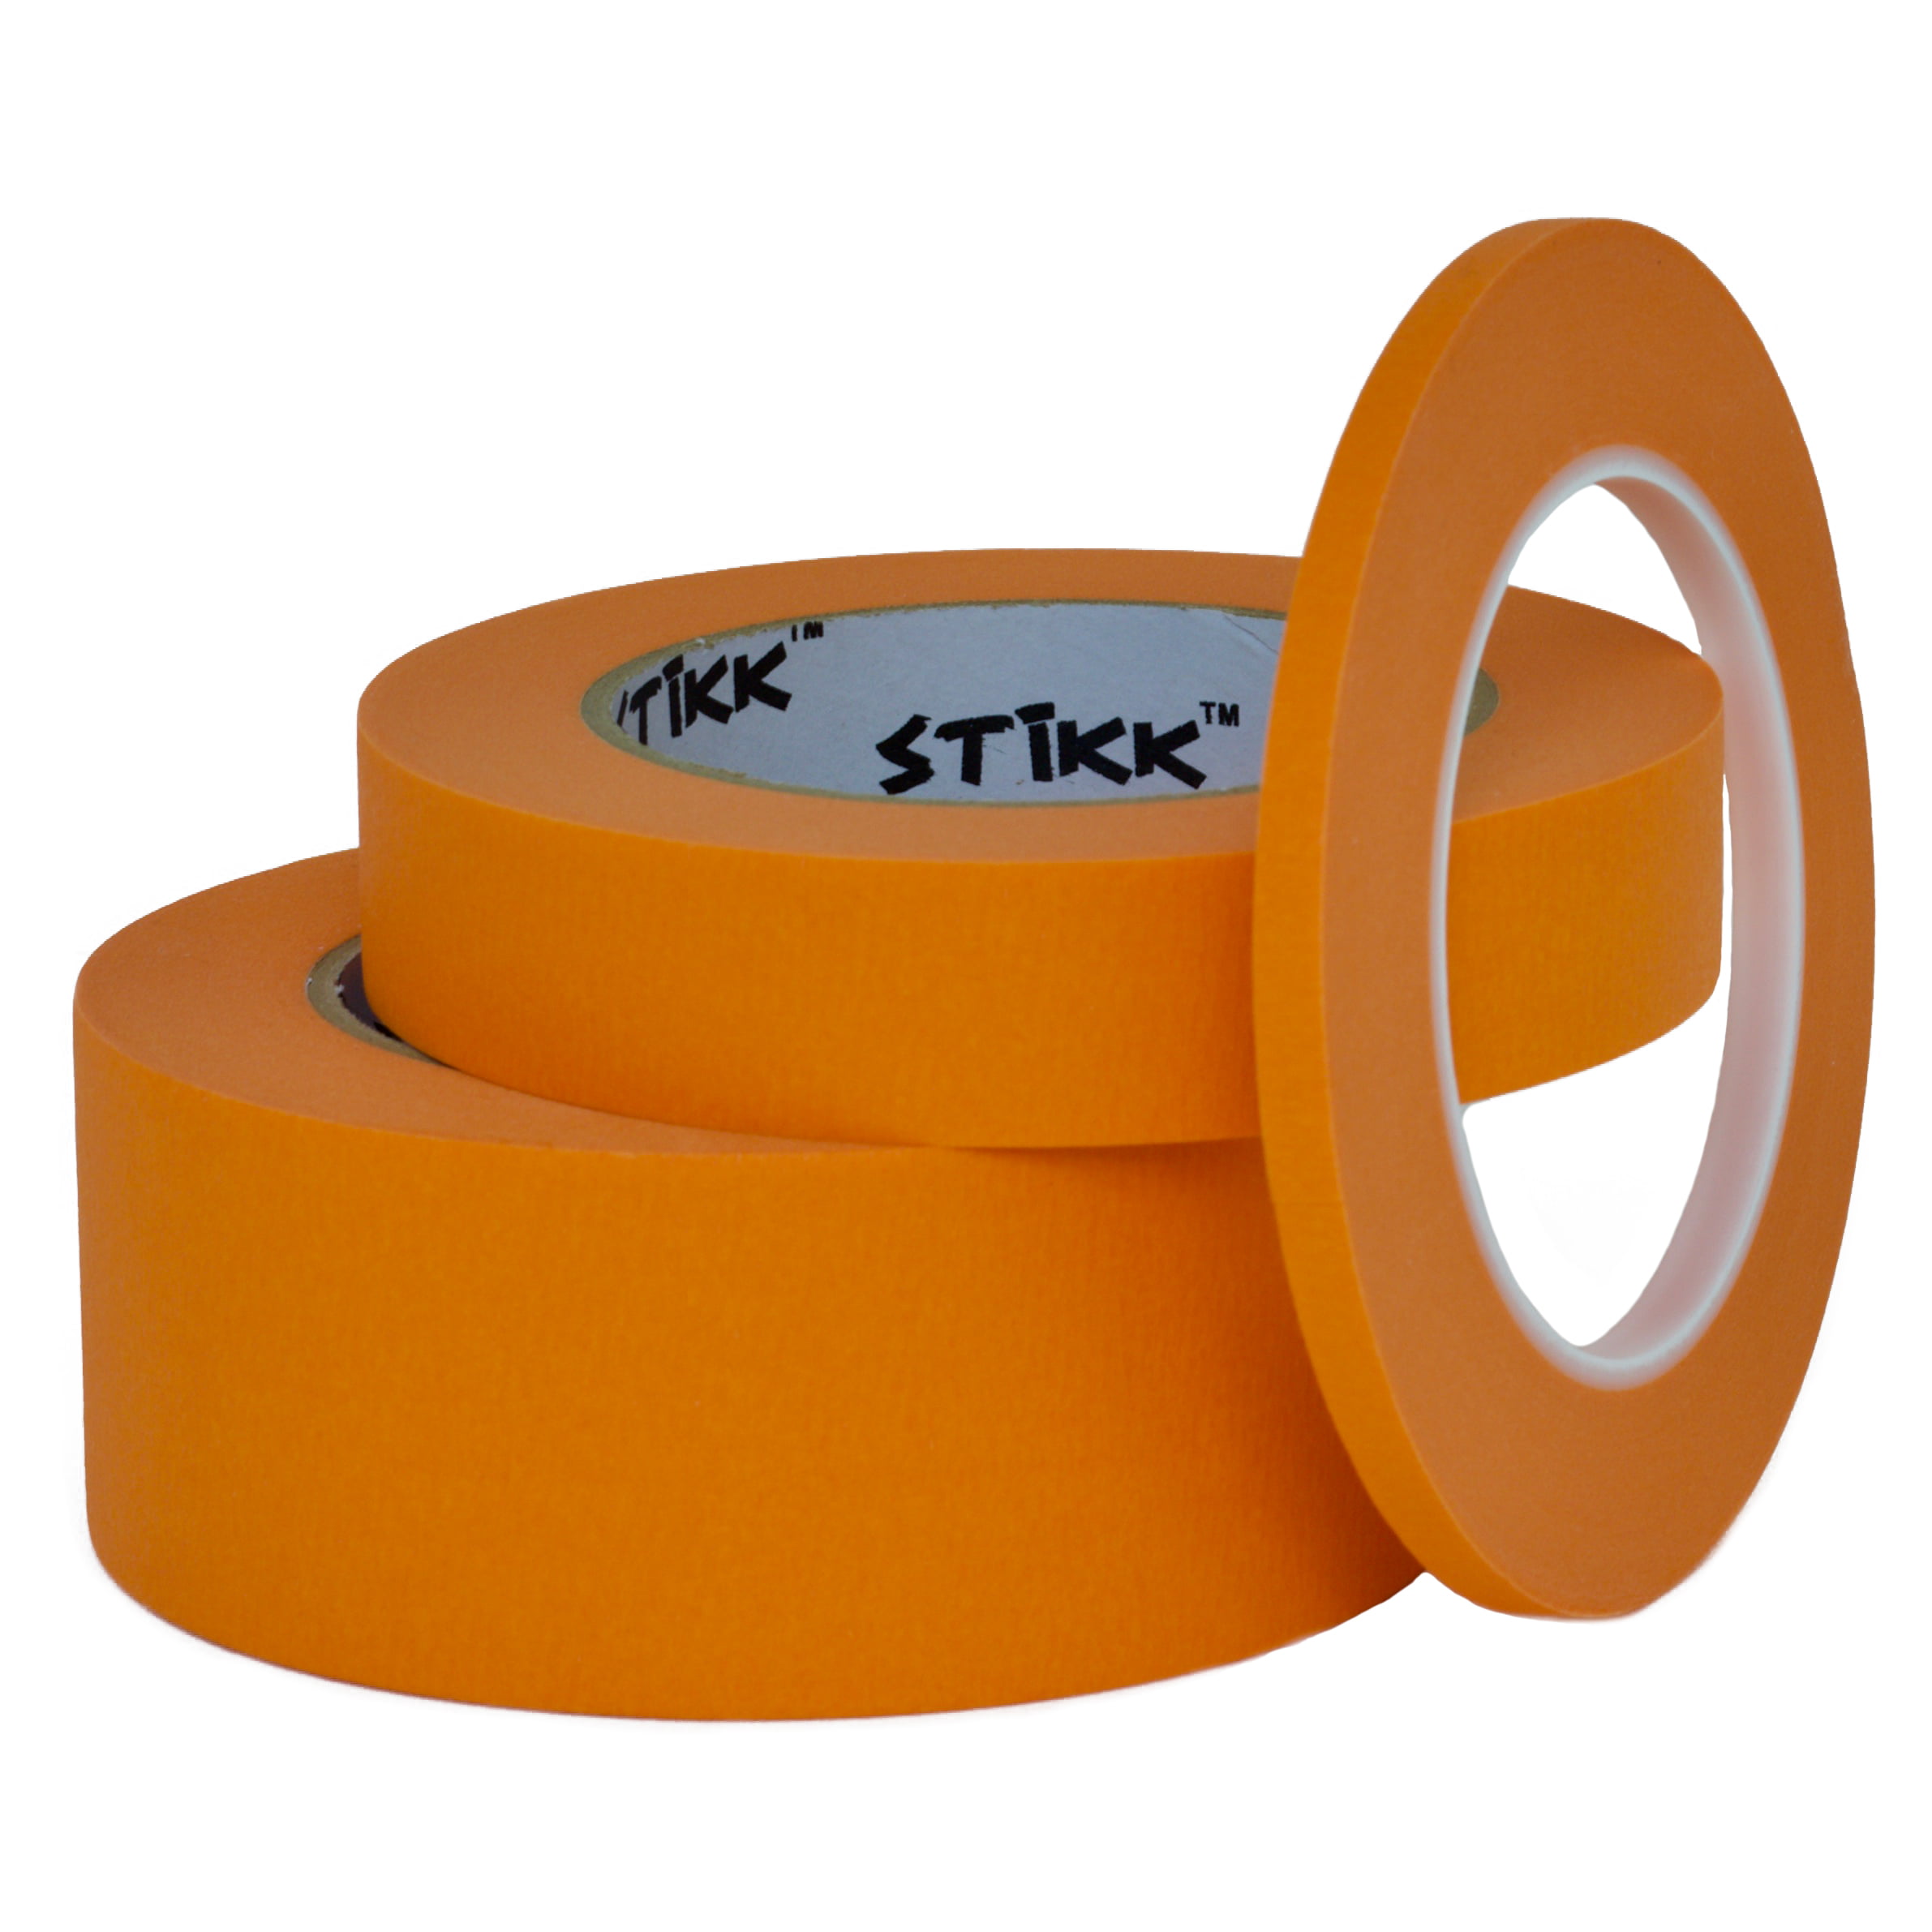 3 pack 1/4" .25 inch x 60yd 6mm x 55m Thin STIKK Yellow Painters Masking Tape 